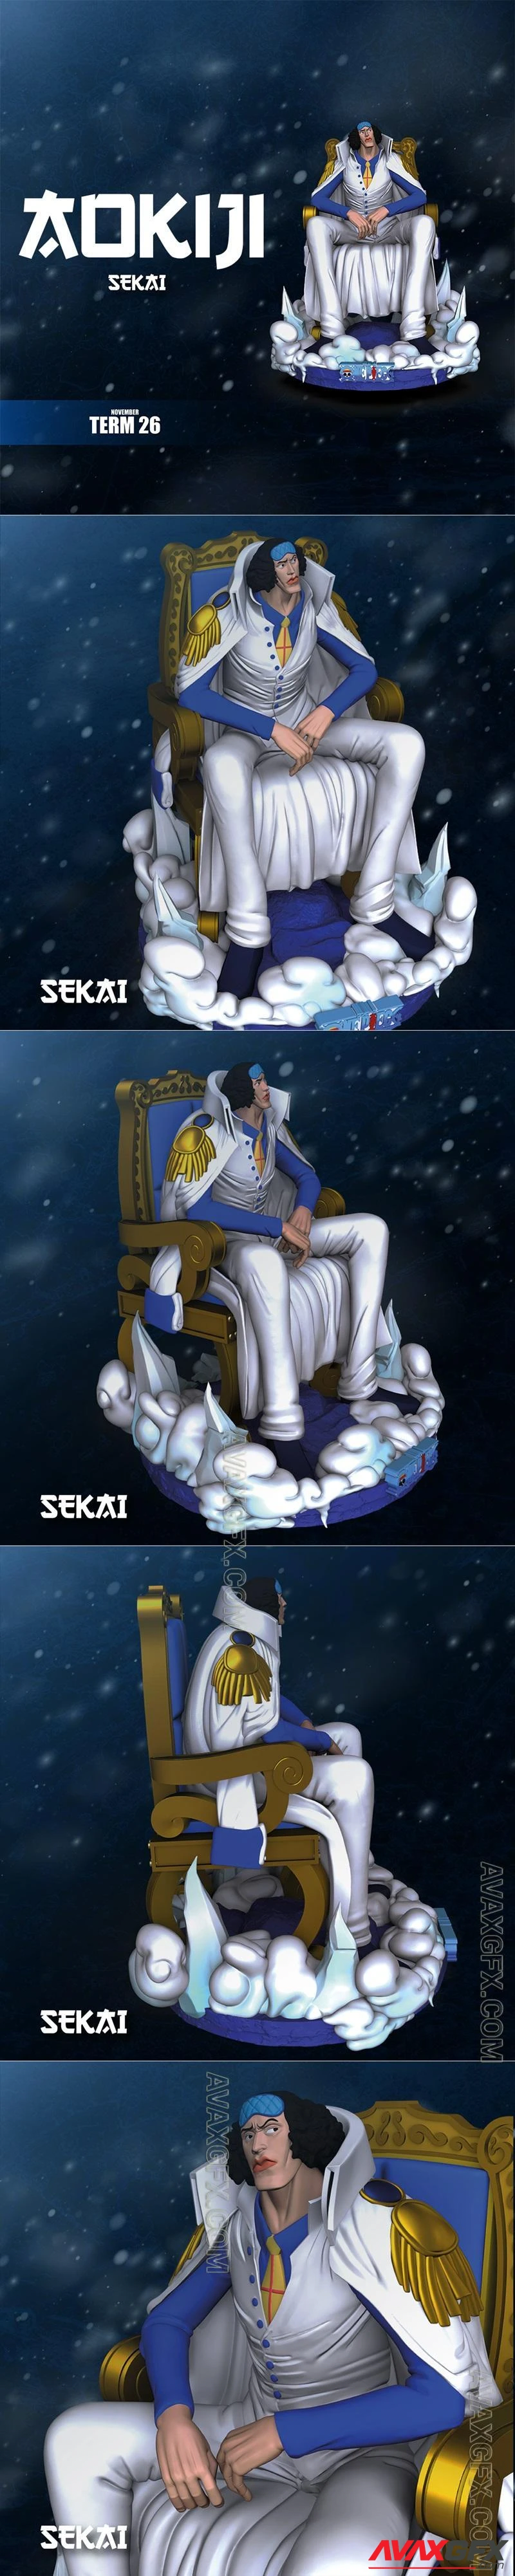 Sekai - Aokiji Statue and Bust - STL 3D Model